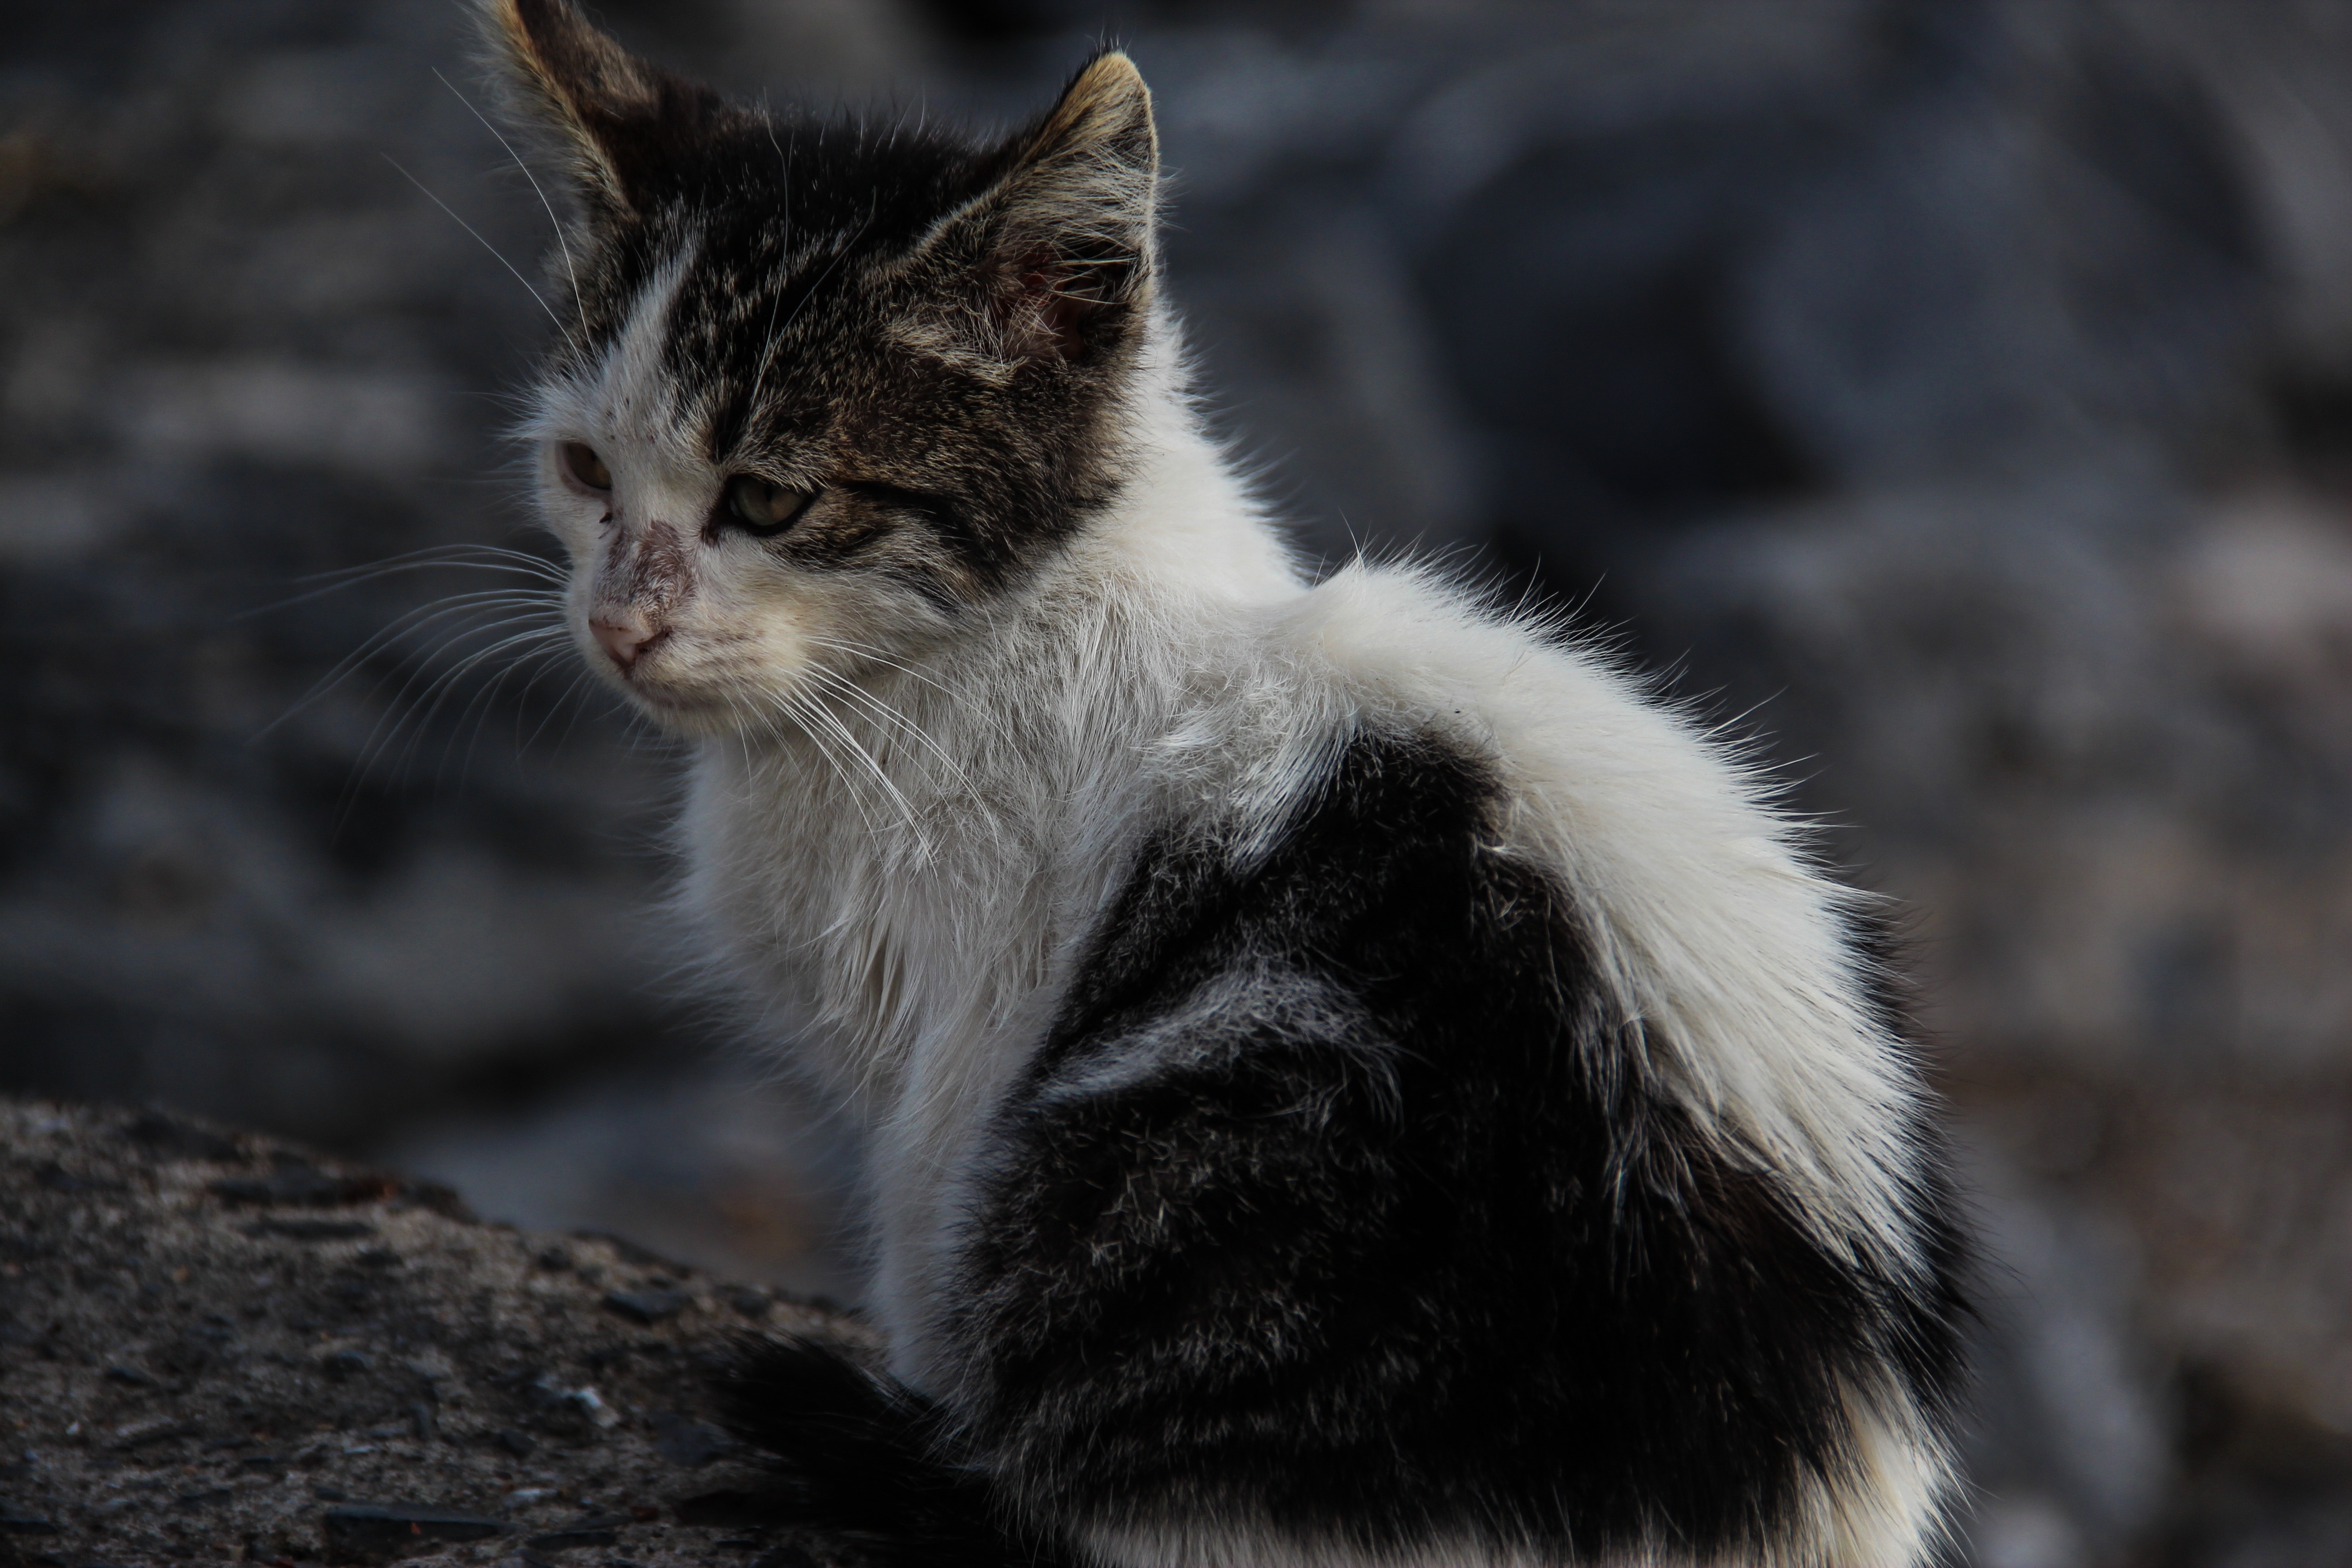 Cat, Kitten, Stray Cat, Black And White, domestic cat, one animal